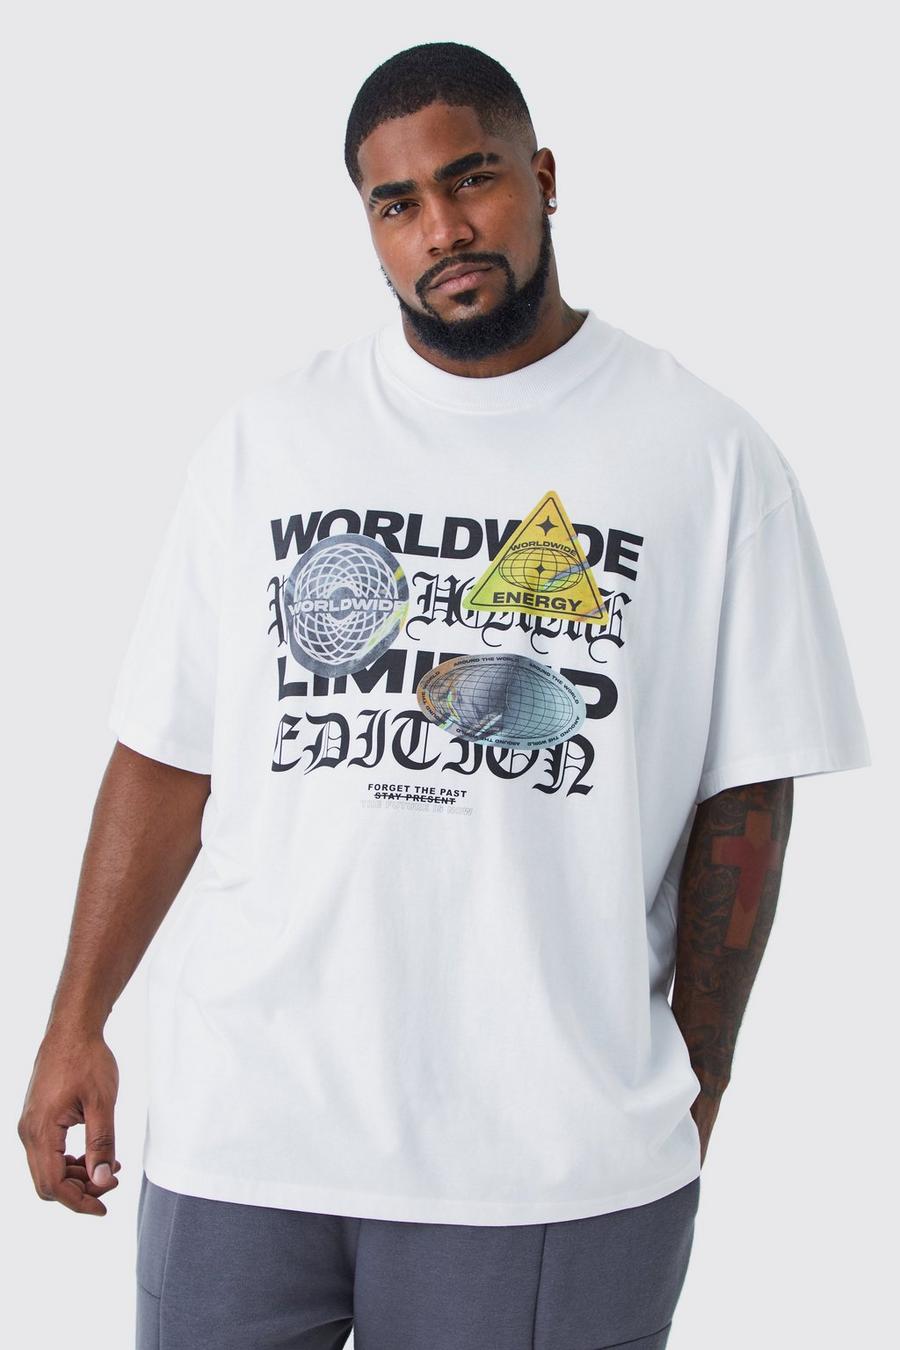 T-shirt Plus Size oversize Worldiwde con girocollo esteso, White bianco